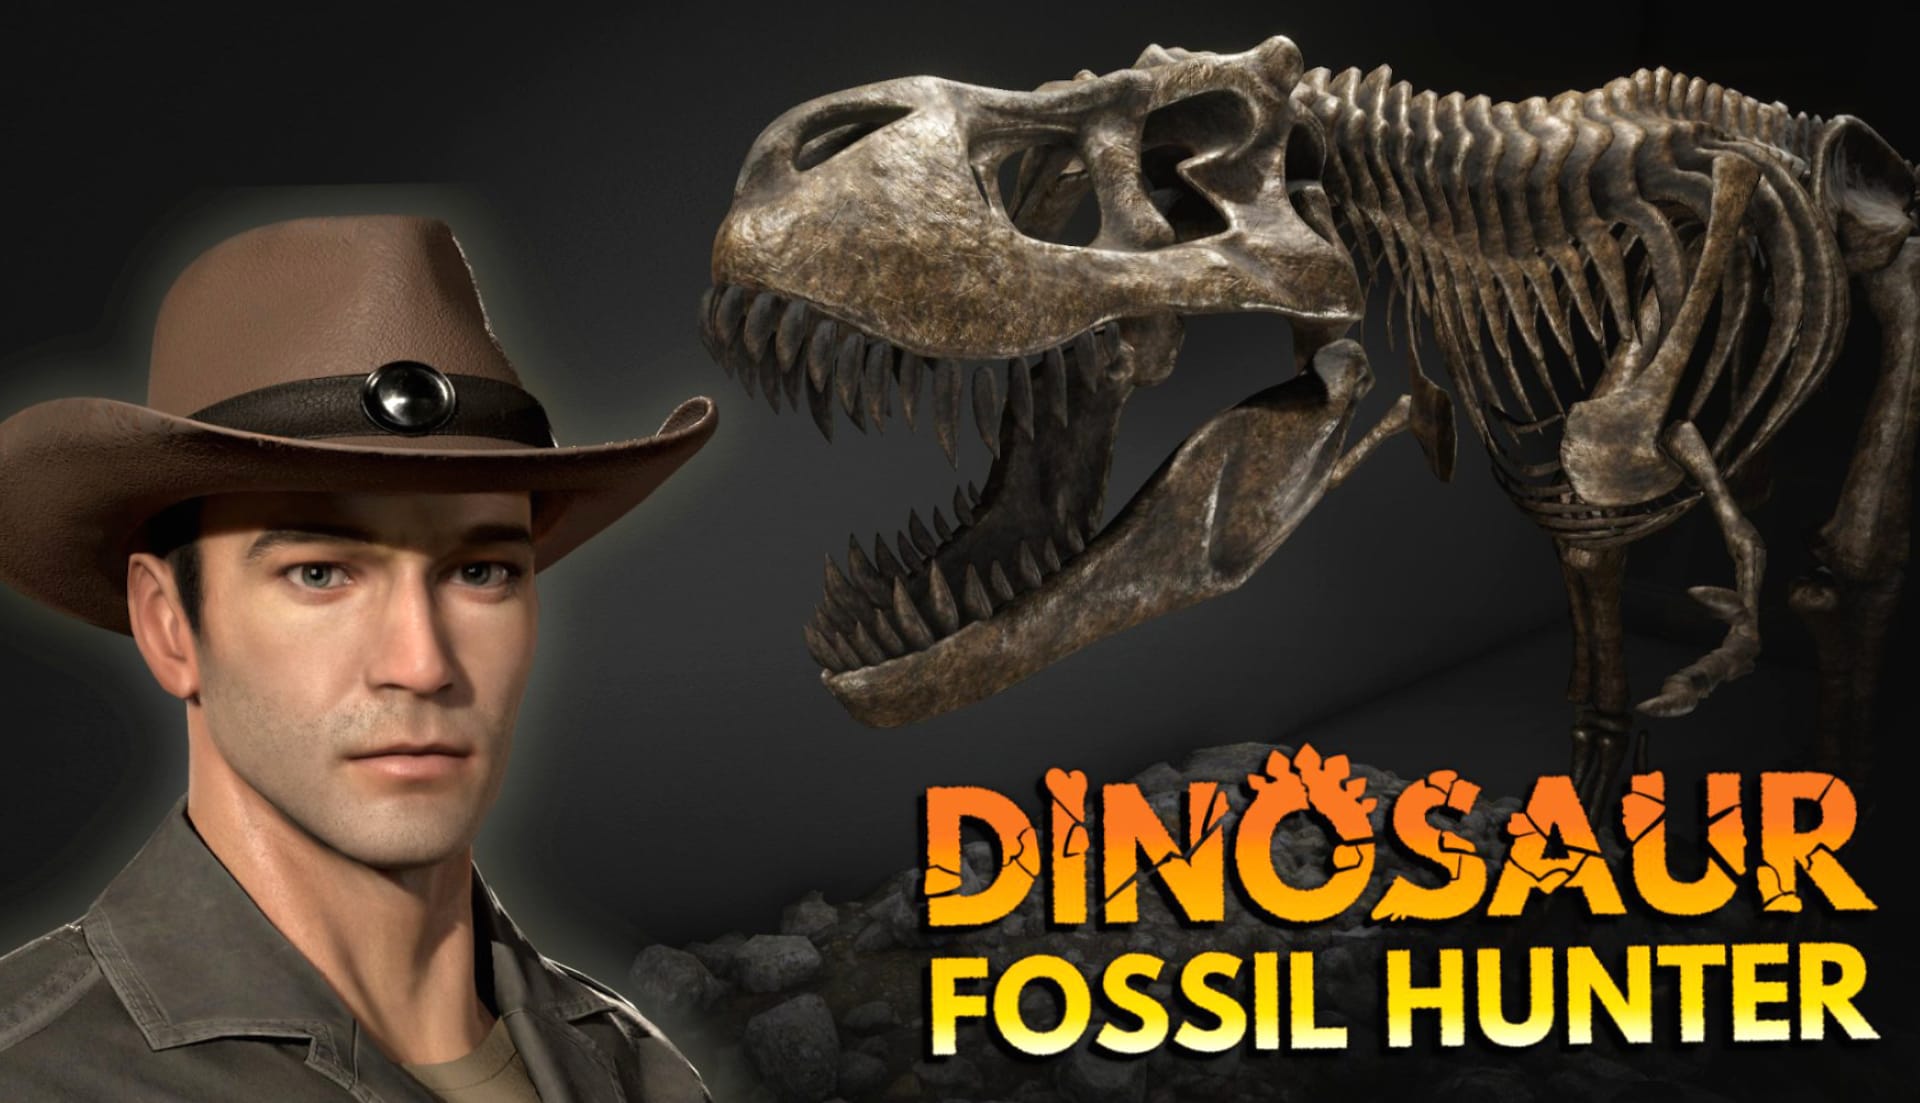 Dinosaur Fossil Hunter at 2048 x 2048 iPad size wallpapers HD quality